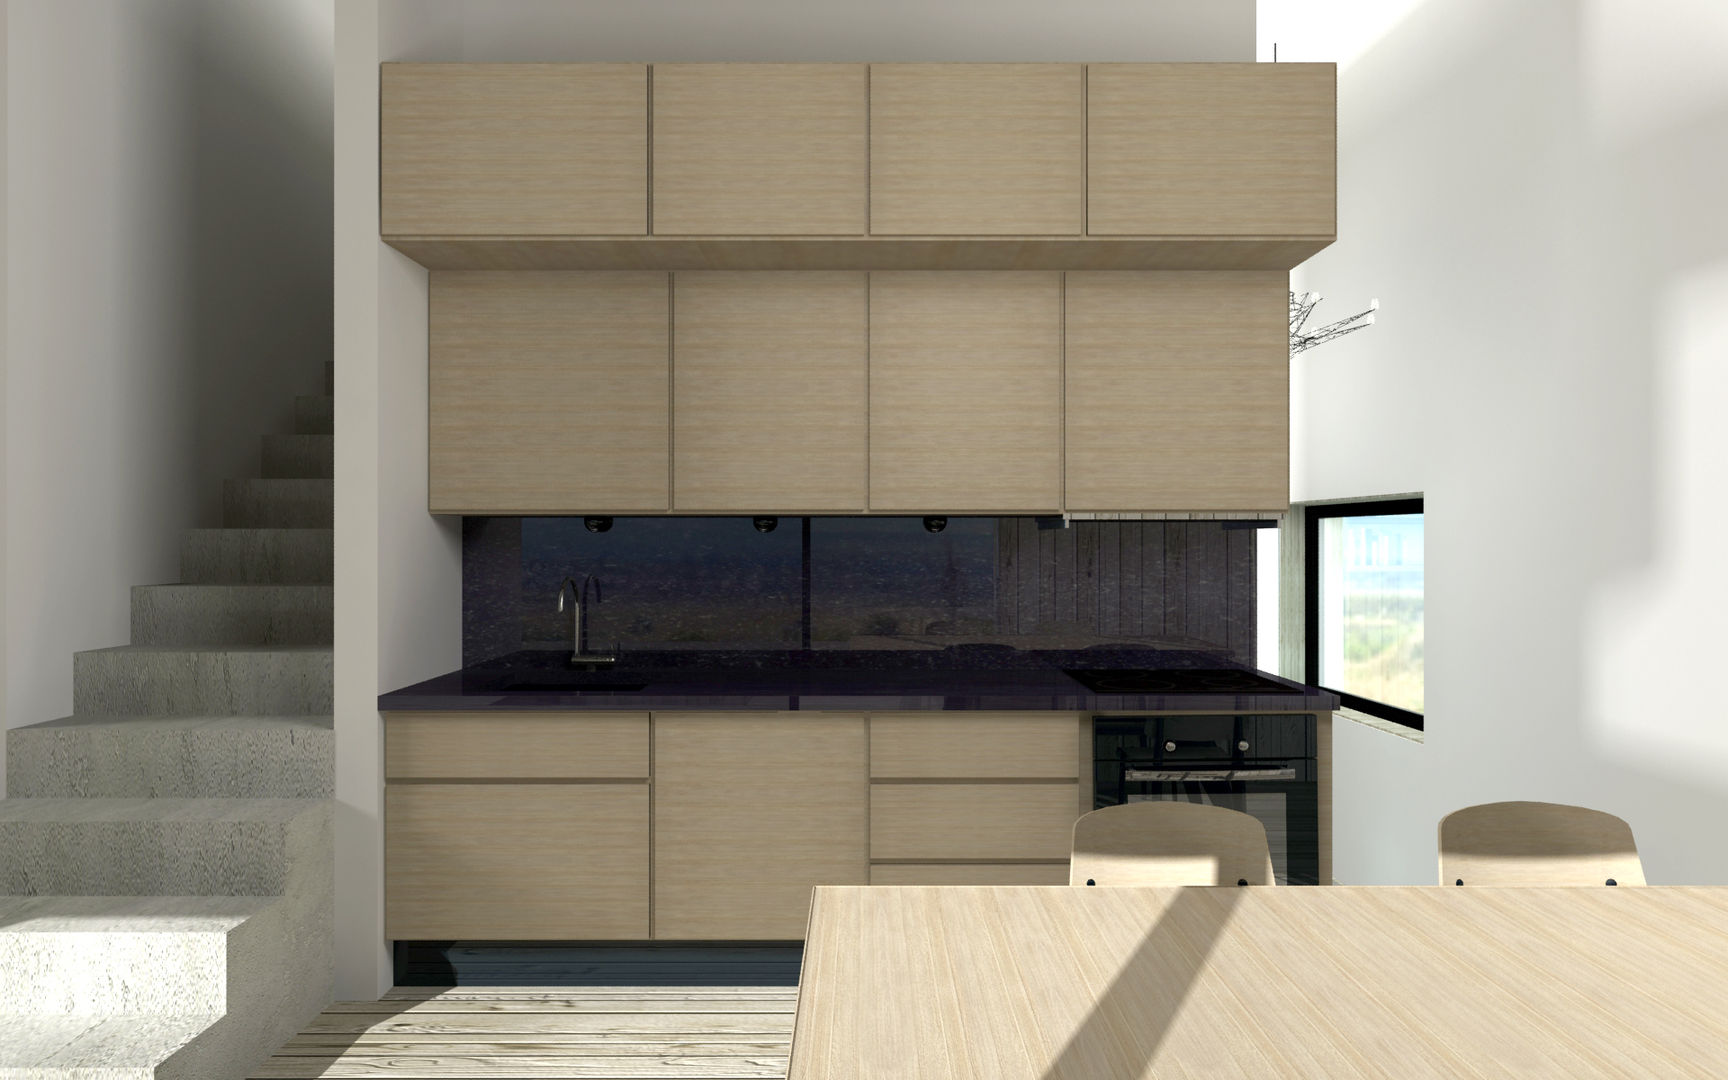 Dom letniskowy na skale, BIG IDEA studio projektowe BIG IDEA studio projektowe Industrial style kitchen Wood Wood effect